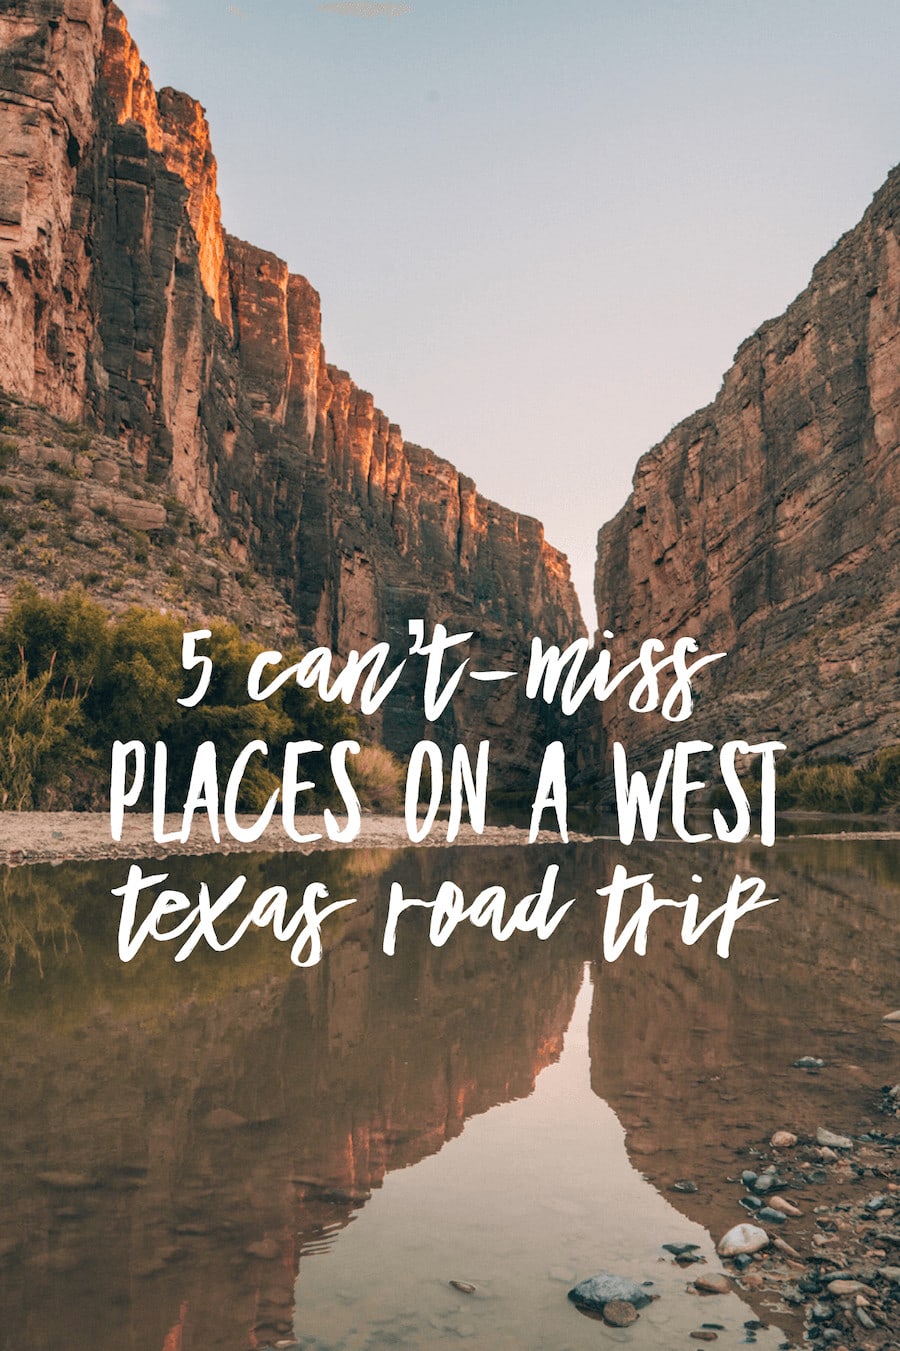 West Texas Road Trip American road trips | Road trip tips | What to do in West Texas | West Texas travel guide | Marfa, Texas | Fort Davis, Texas | El Paso, Texas | USA travel | Big Bend National Park | Terlingua, Texas | Ghost towns | Hiking trips | Outdoor adventure travel | 